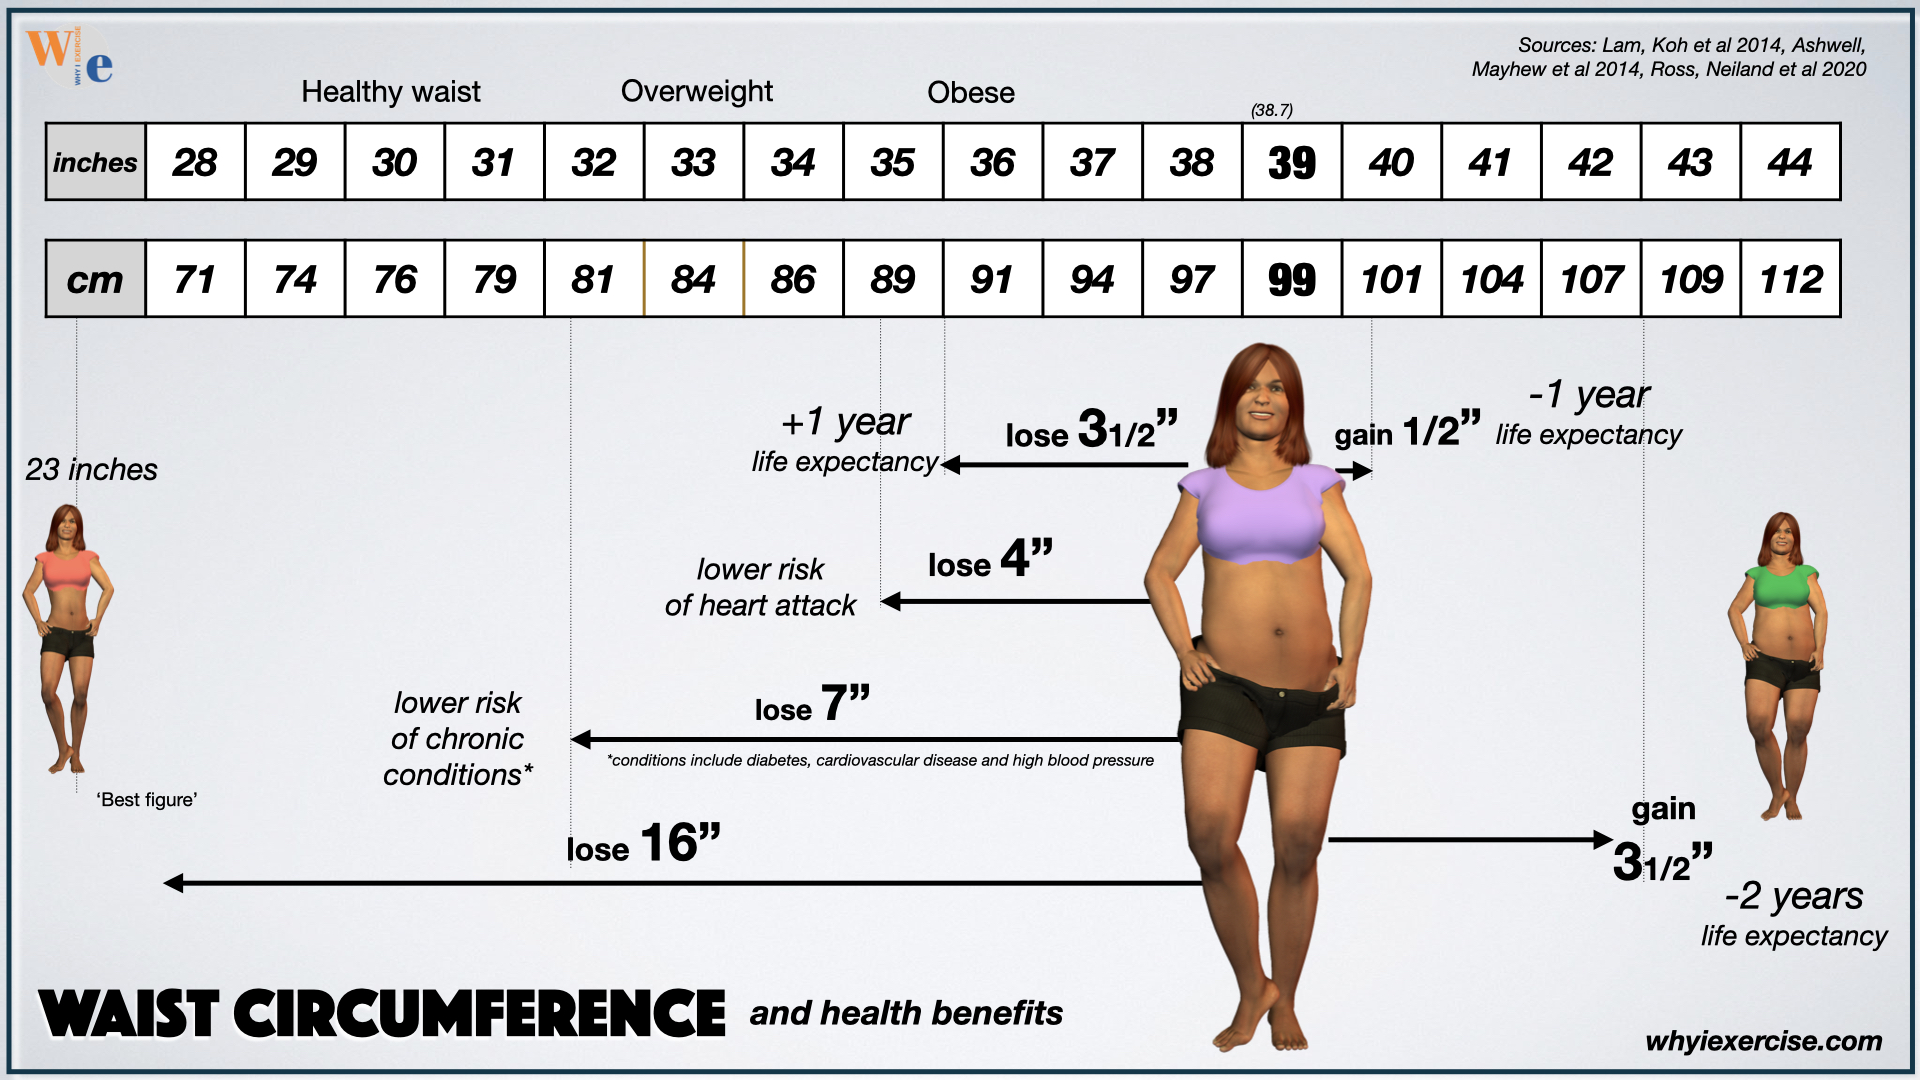 https://www.whyiexercise.com/images/waist.circumference.health.benefits.women.jpg